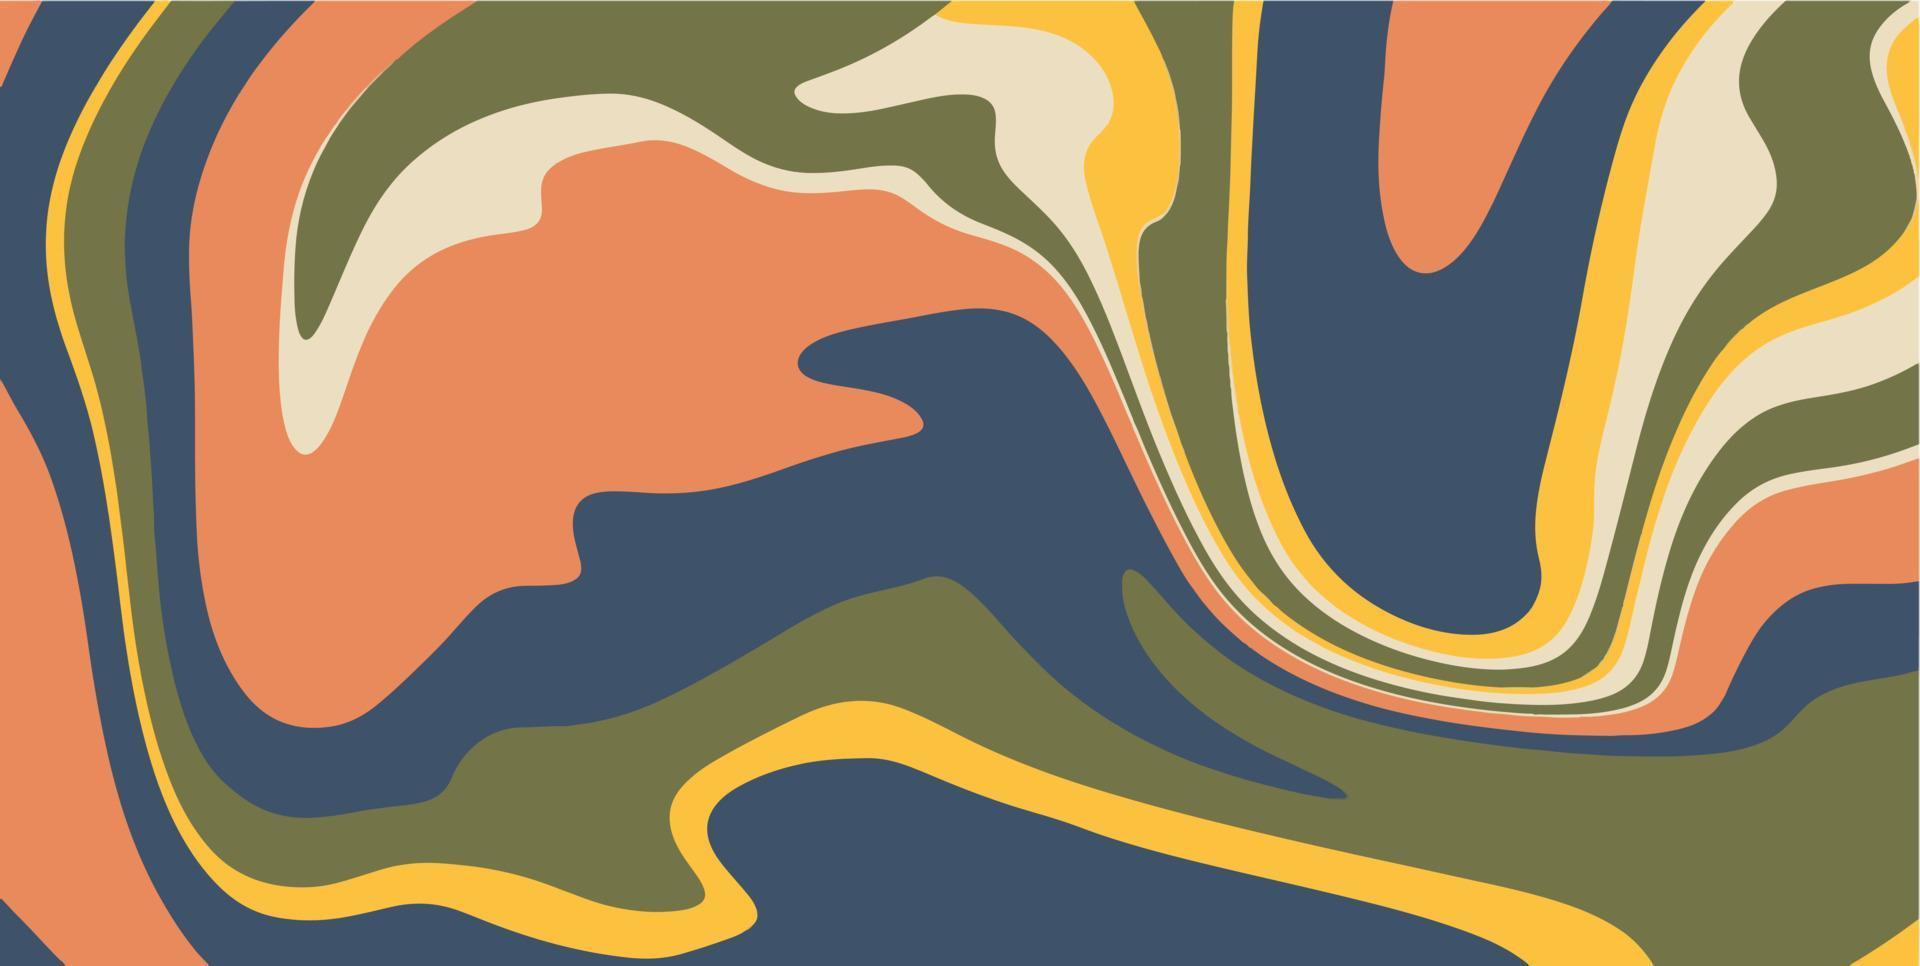  Psychedelisch Hintergrundbild 1920x966. Groovy Swirl psychedelic background. Retro 70s Hippie Aesthetic wallpaper with Trippy distortion Waves. Vector modern Seventies Style illustration